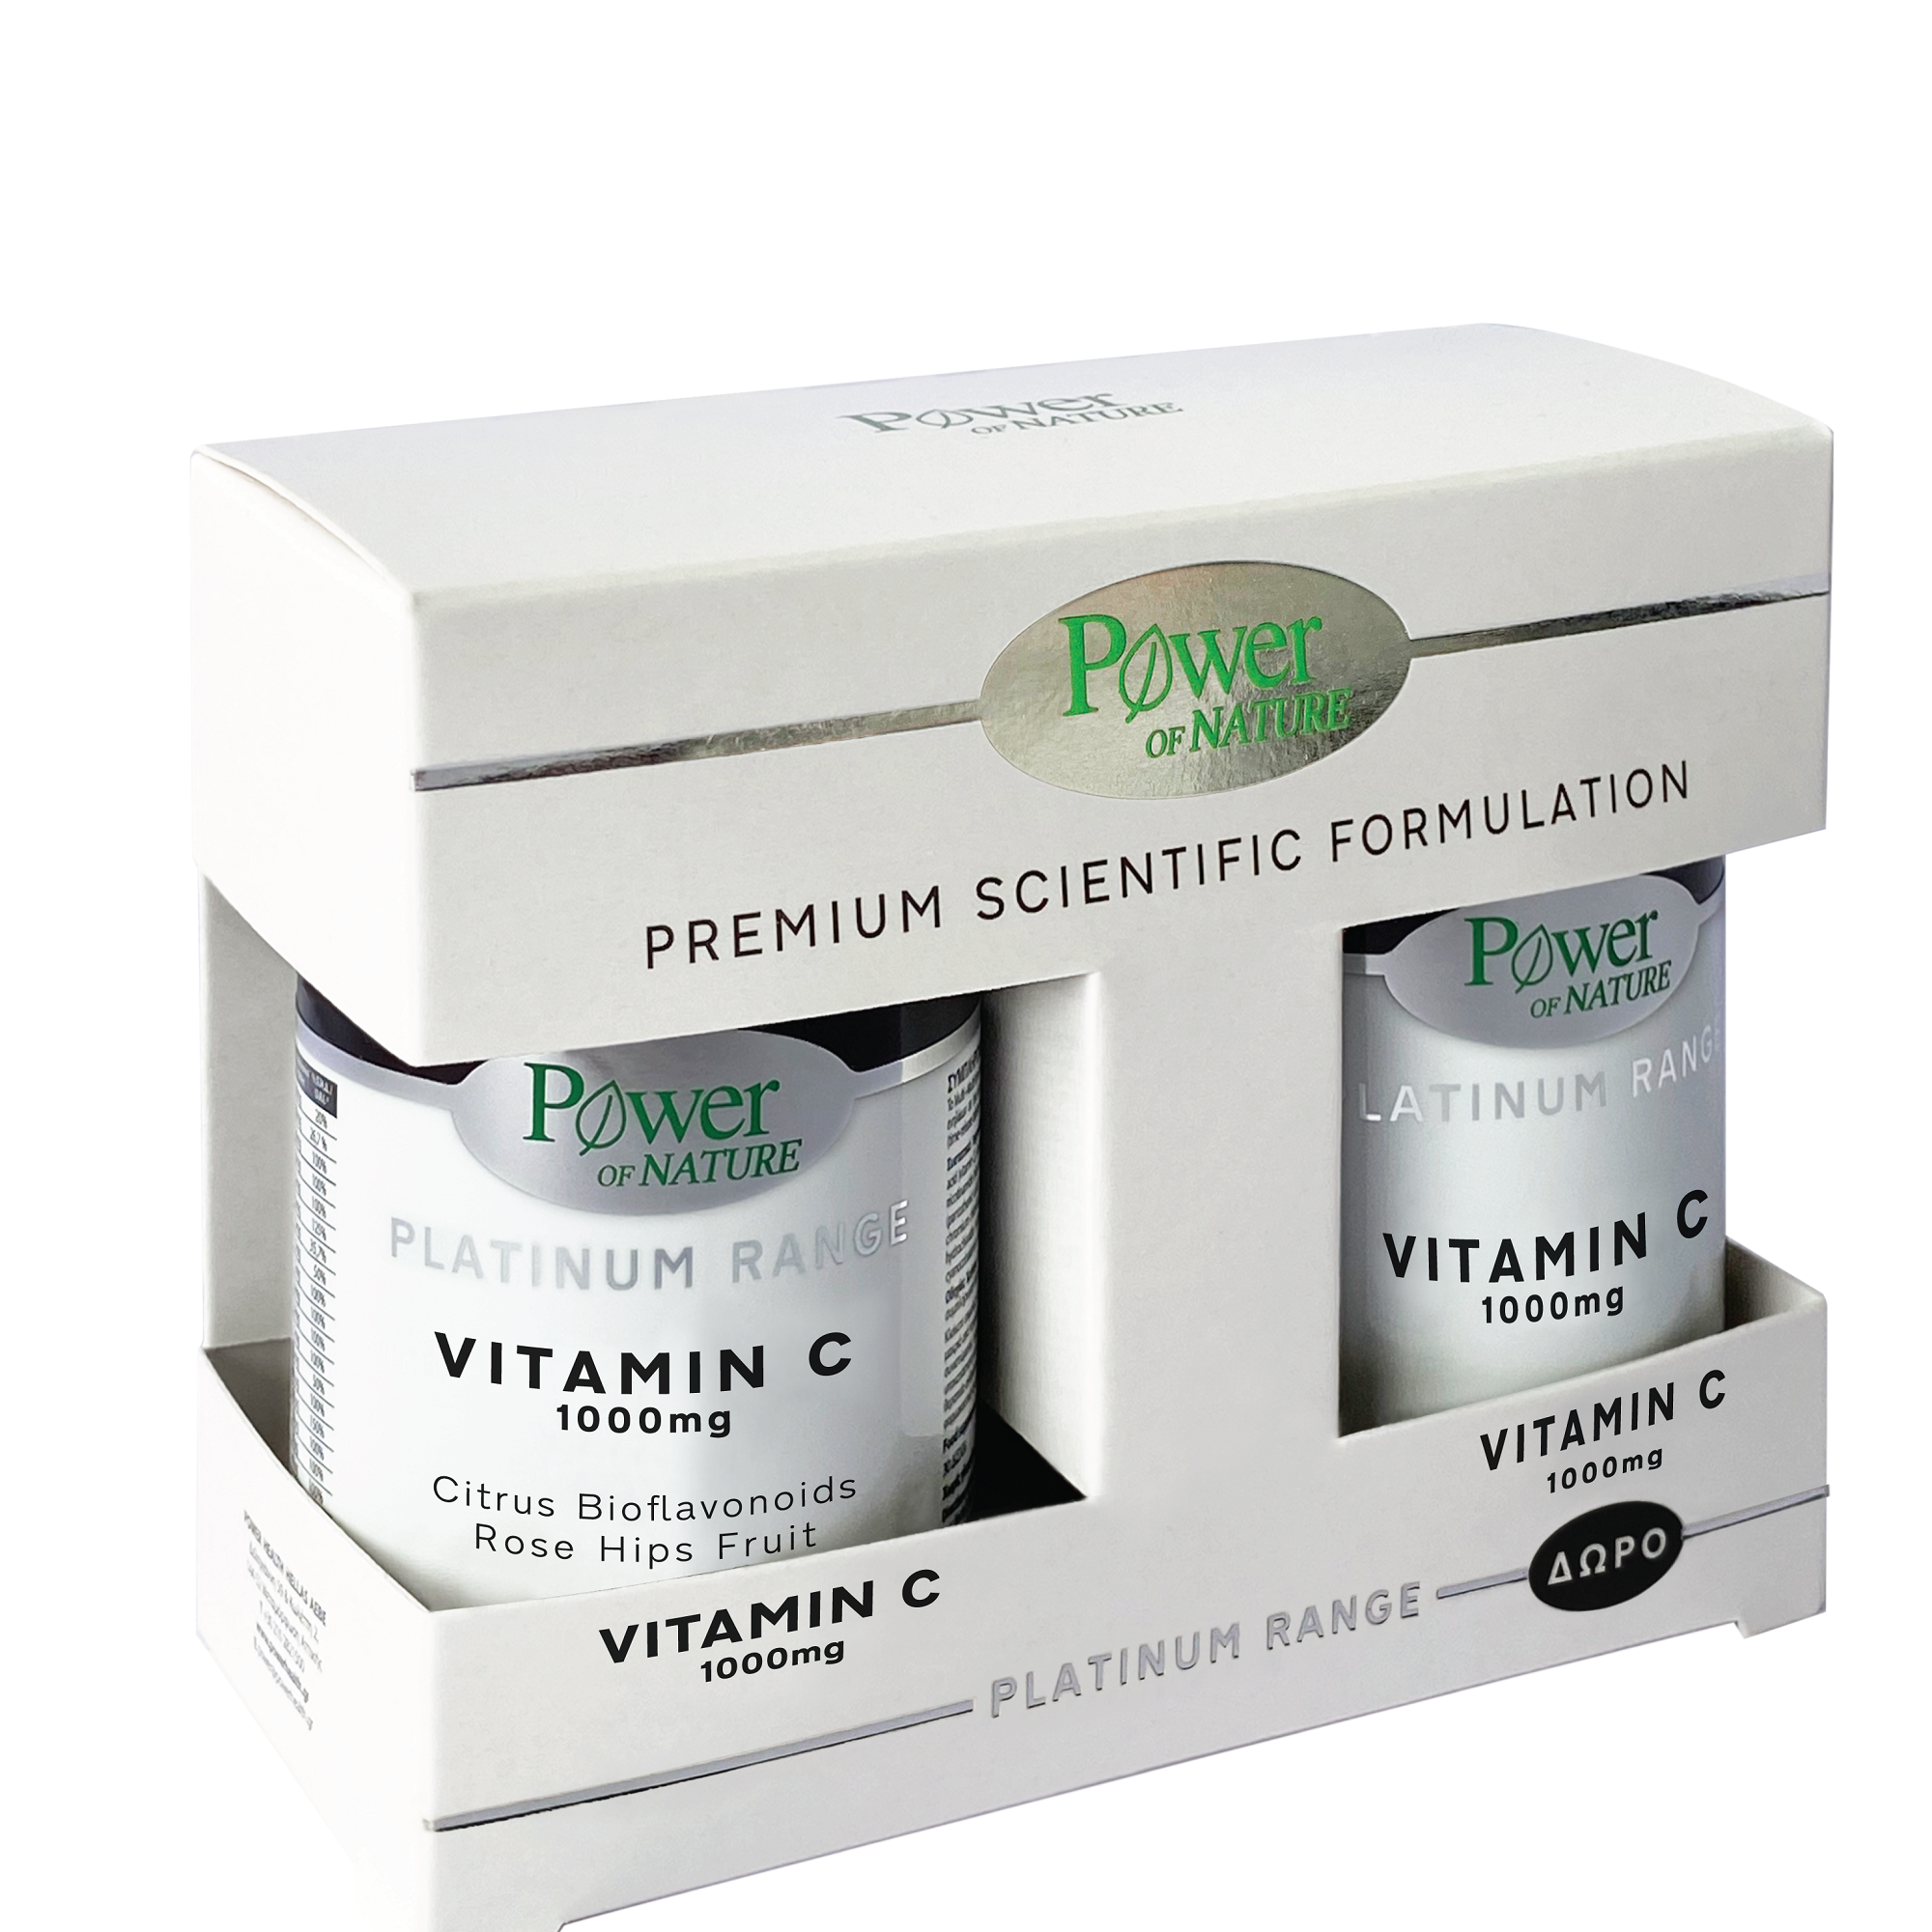 Pachet Vitamina C 1000mg 30 tablete + Vitamina C 1000mg 20 tablete Platinum, Power of Nature